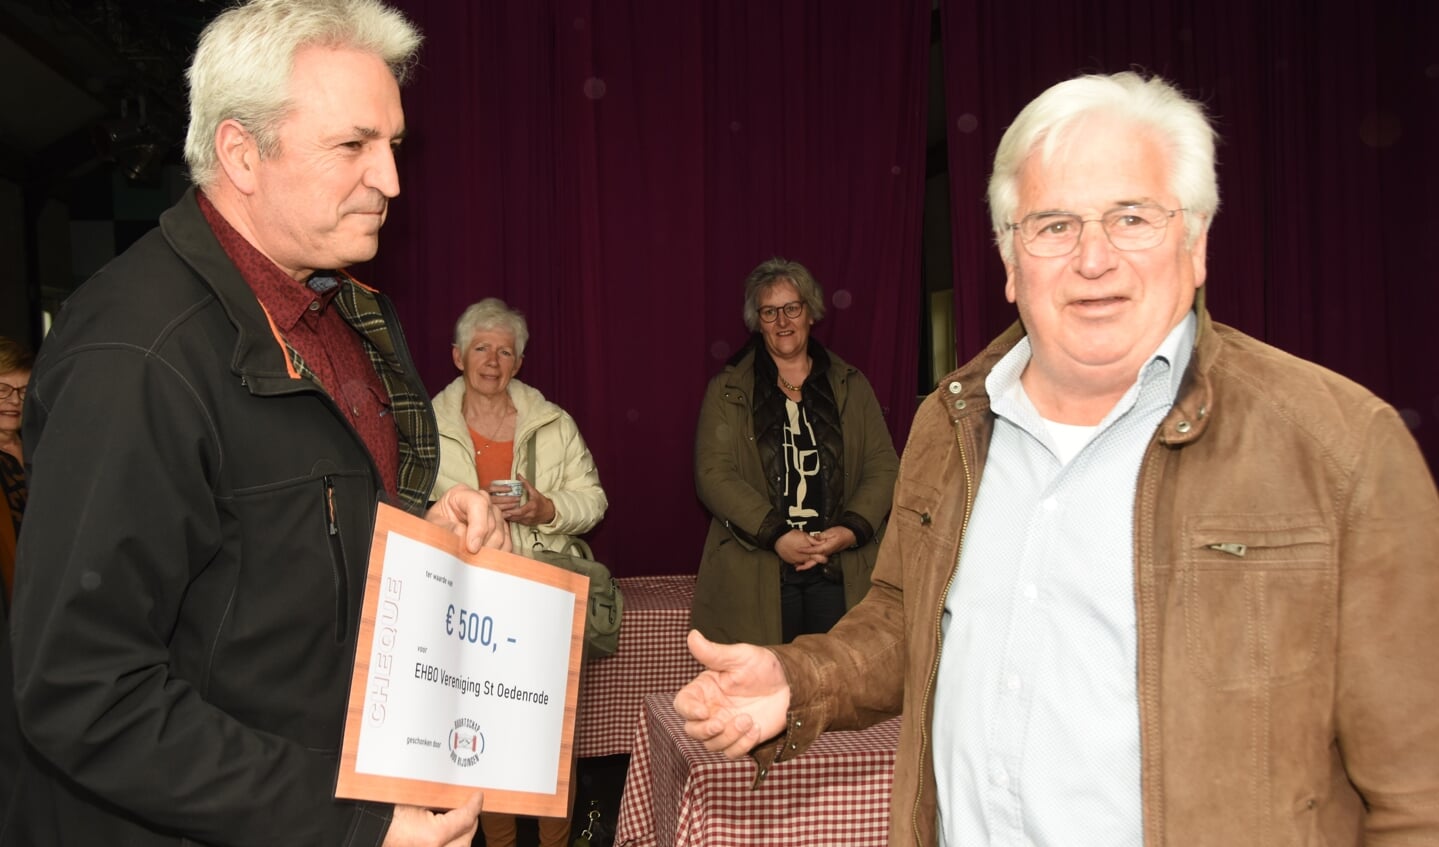 ‘EHBO-vereniging Sint-Oedenrode’ kreeg 500 euro